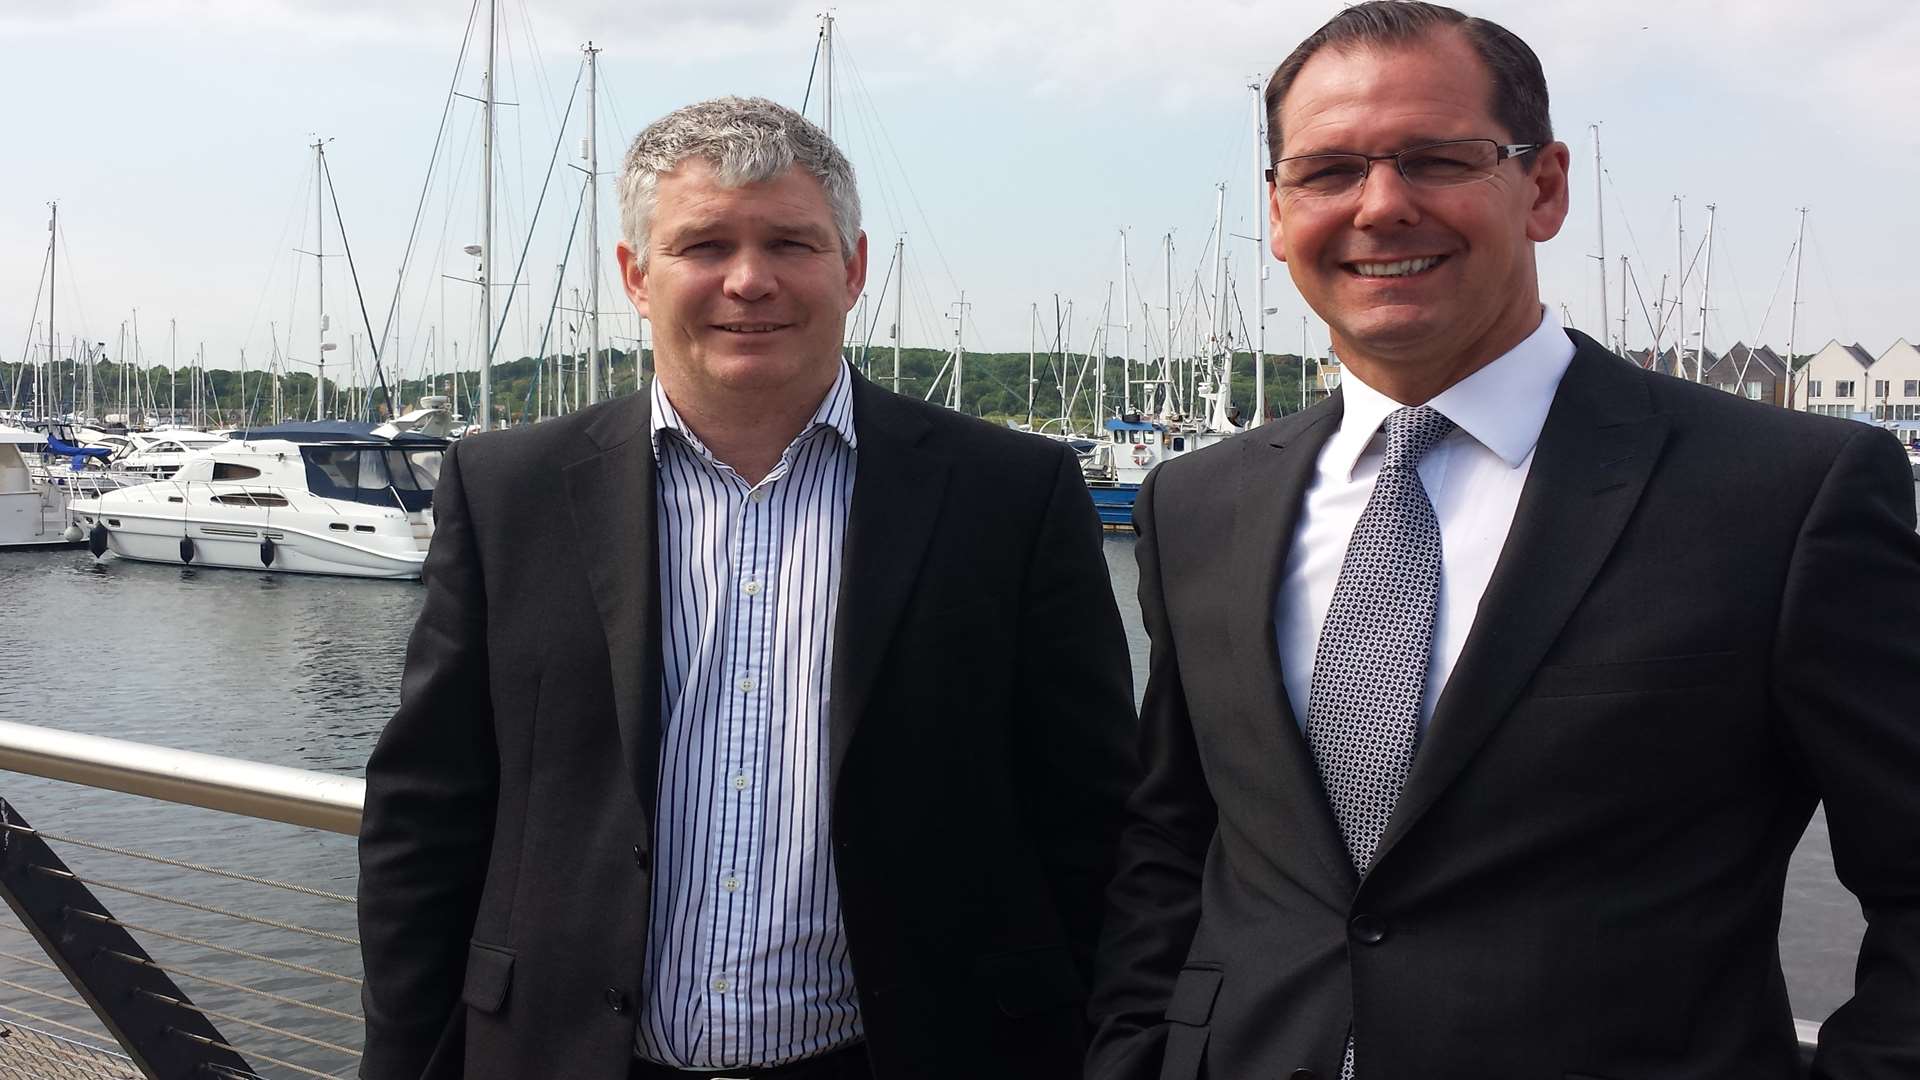 KPMG managing director of Enterprise for Kent Tim Rush, left, and KPMG partner David Bywater